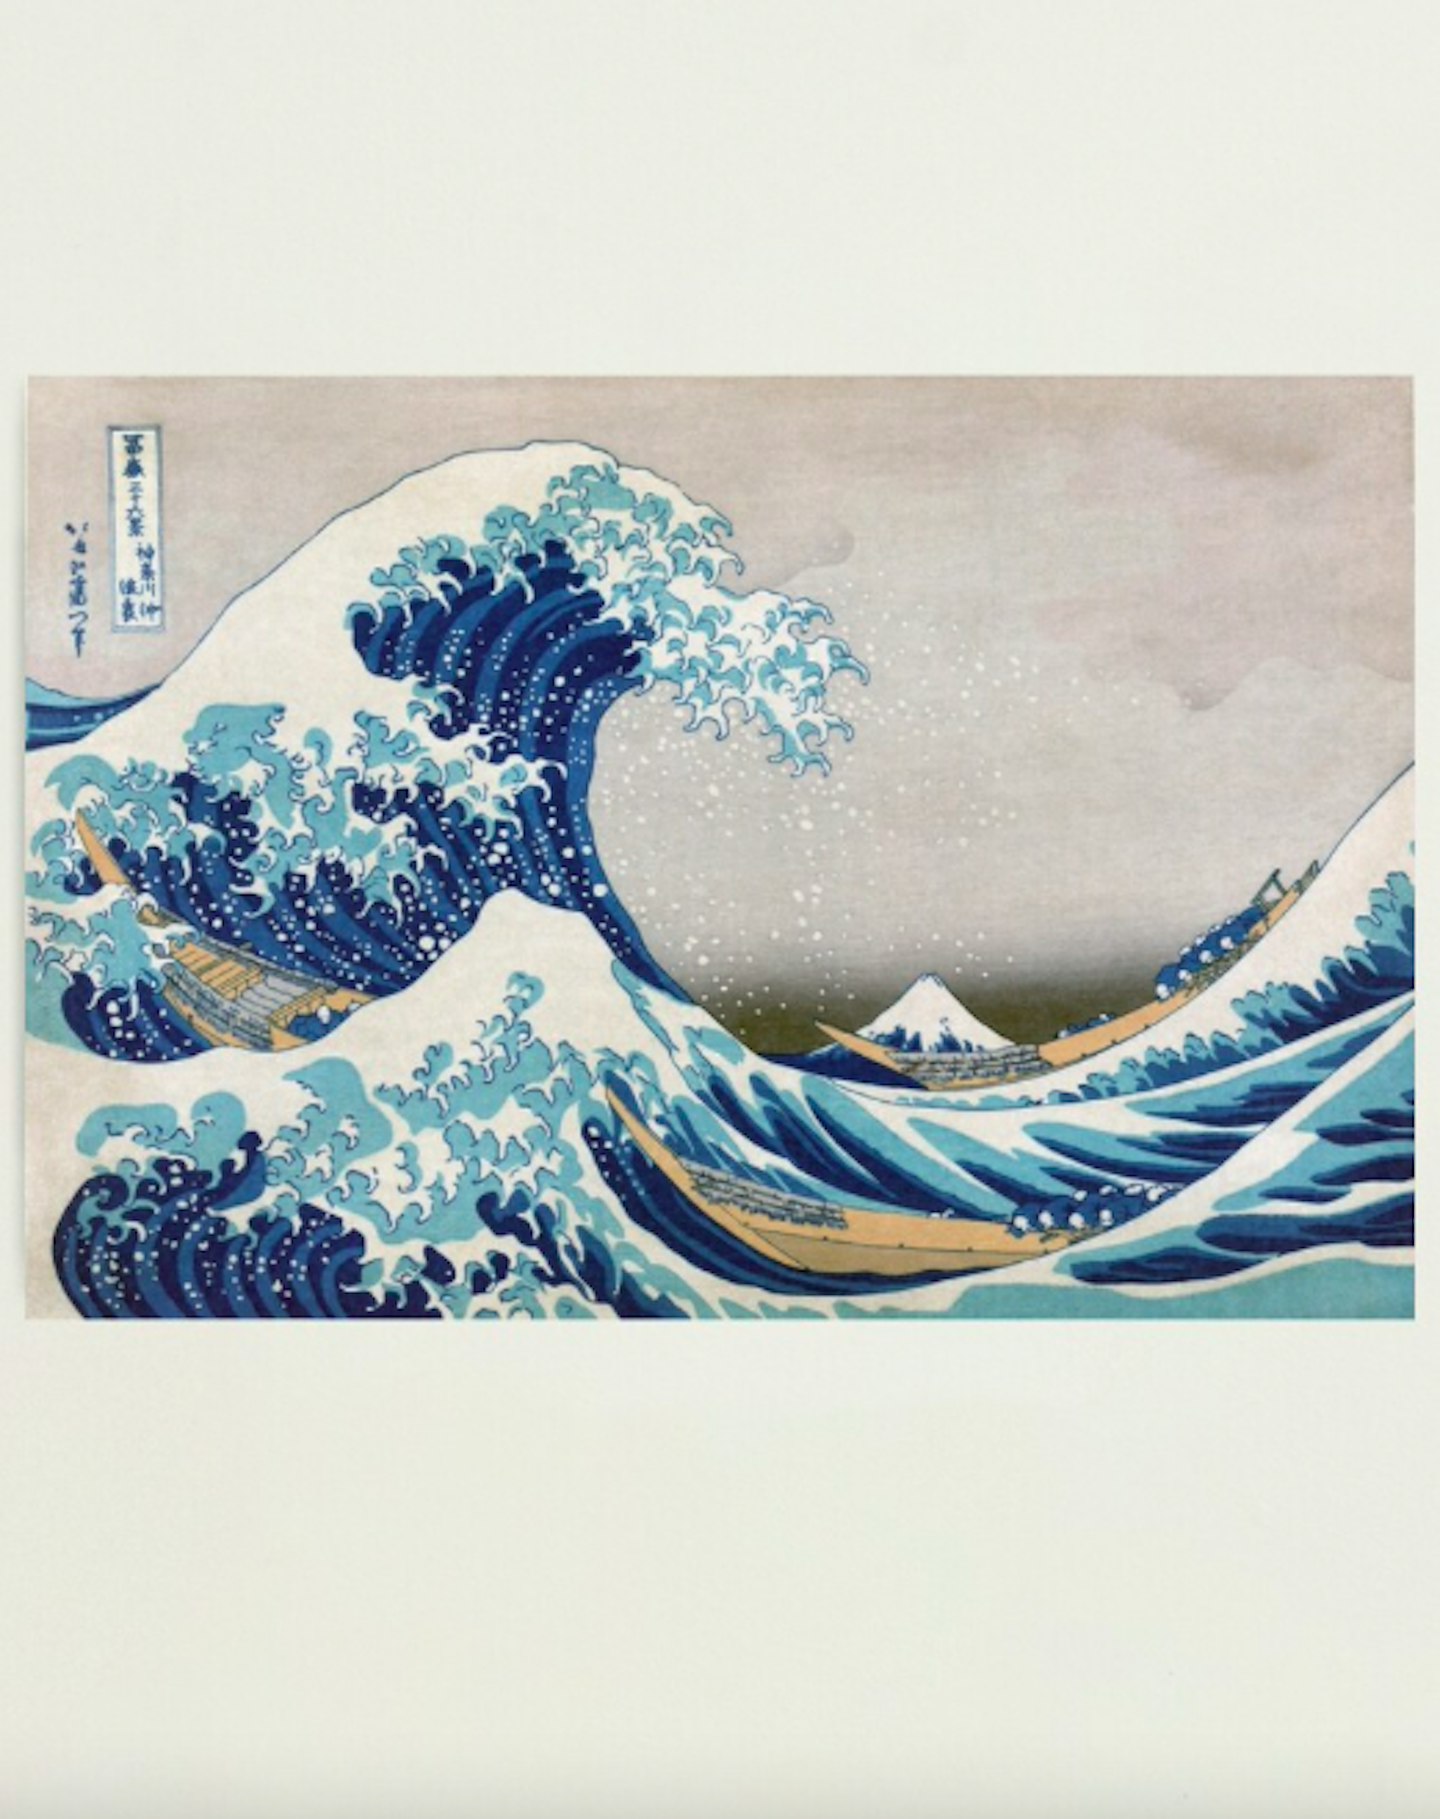 Redbubble, Under the Wave off Kanagawa - The Great Wave - Katsushika Hokusai Photographic Print, £12.45